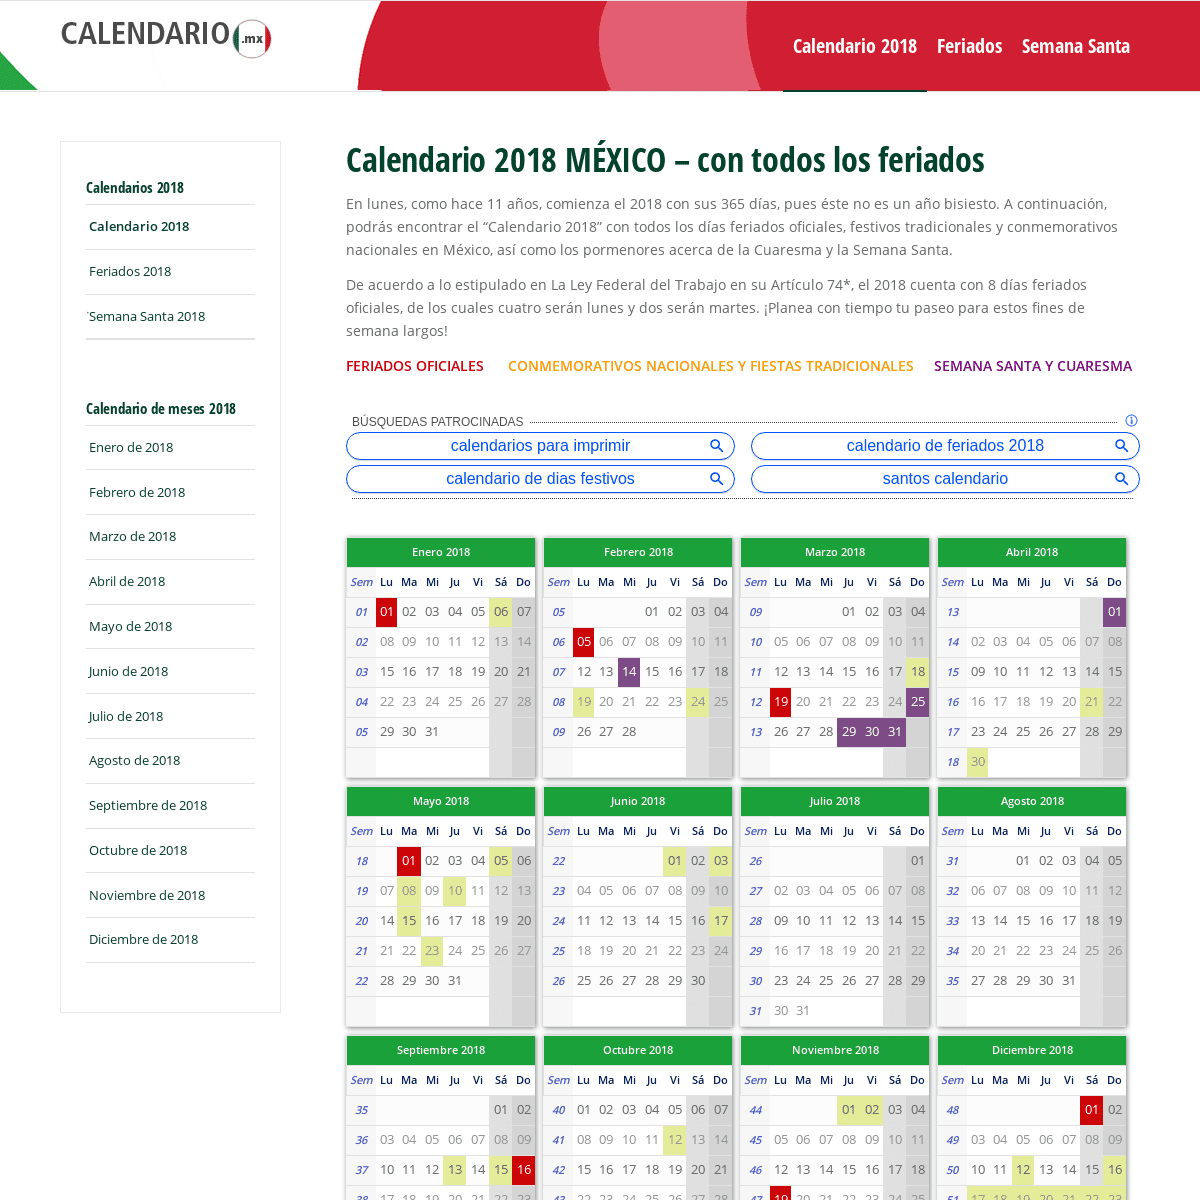 A complete backup of calendario.mx